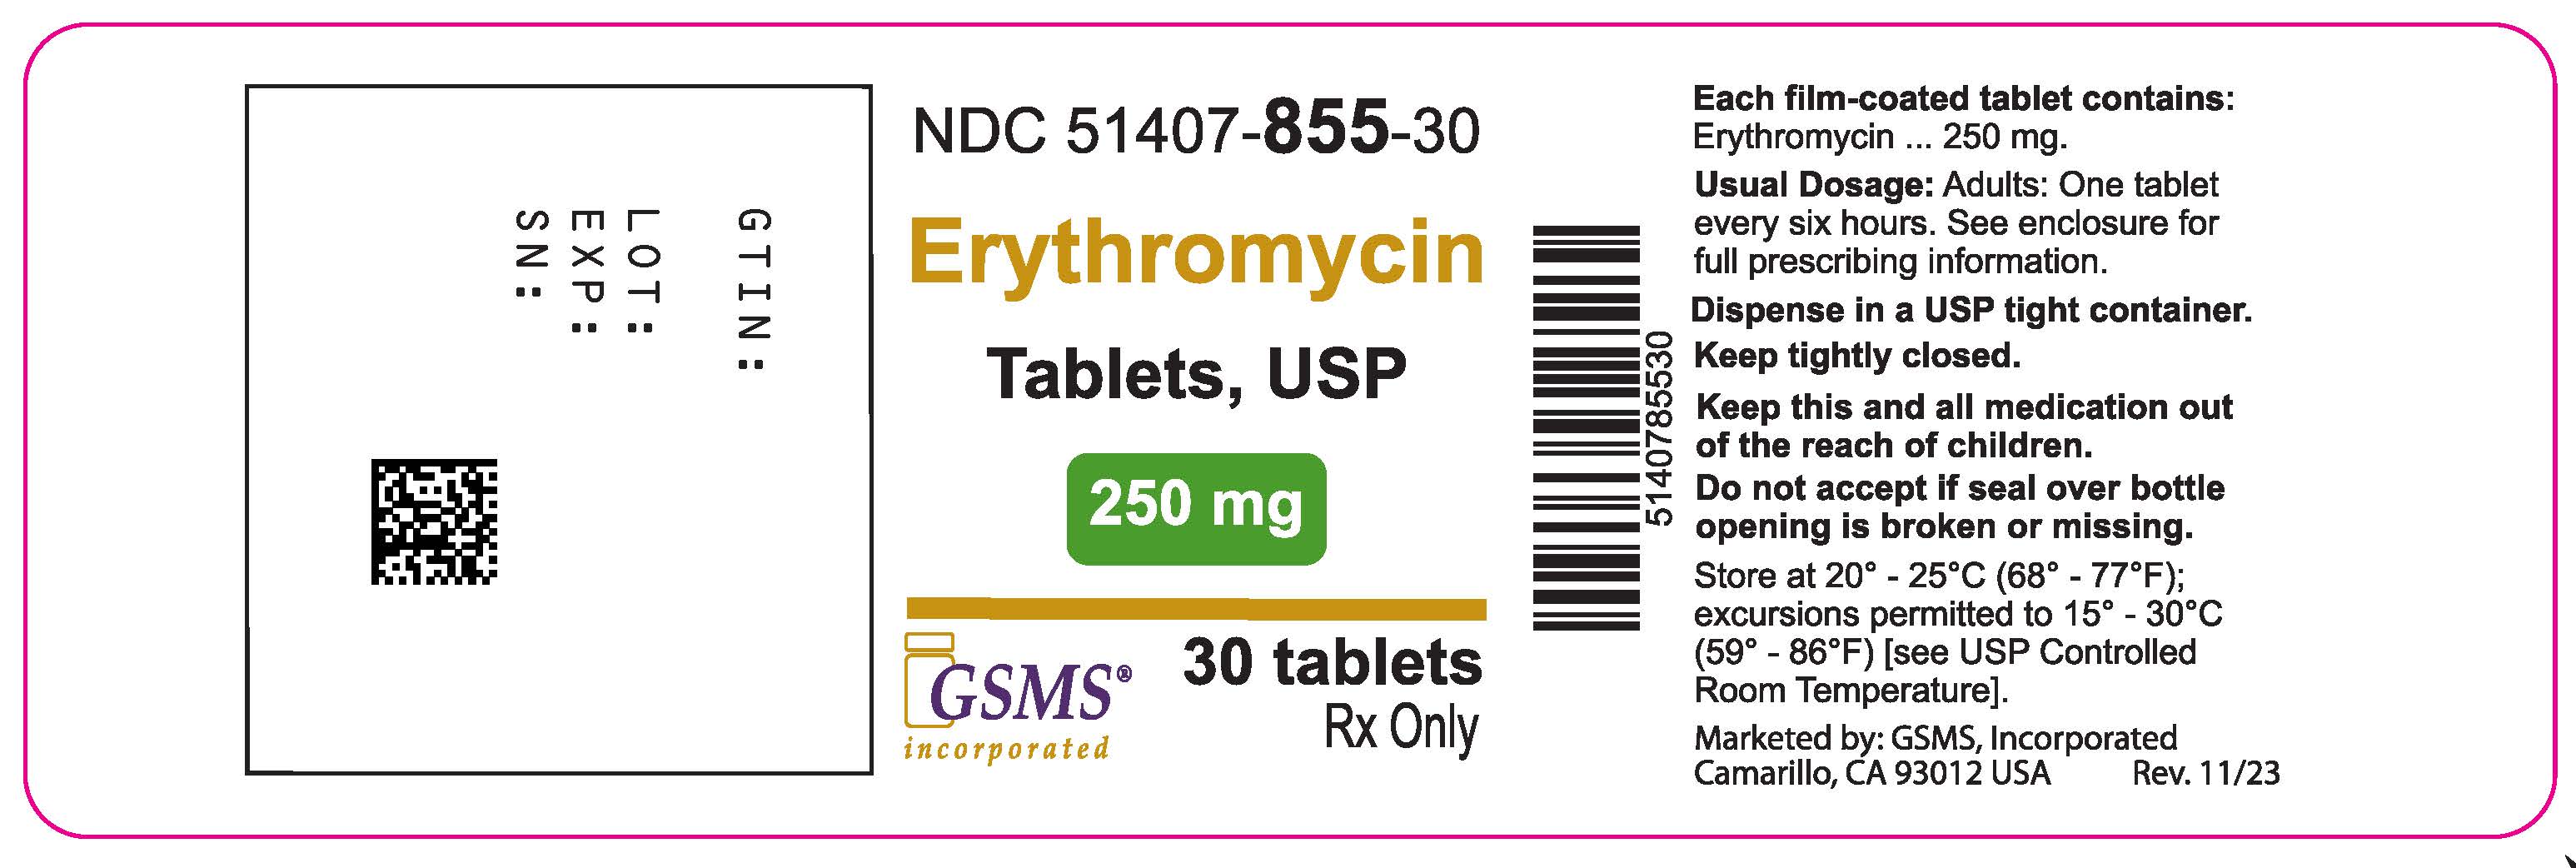 51407-855-30OL - Erythromycin Tablets - Rev. 1123.jpg